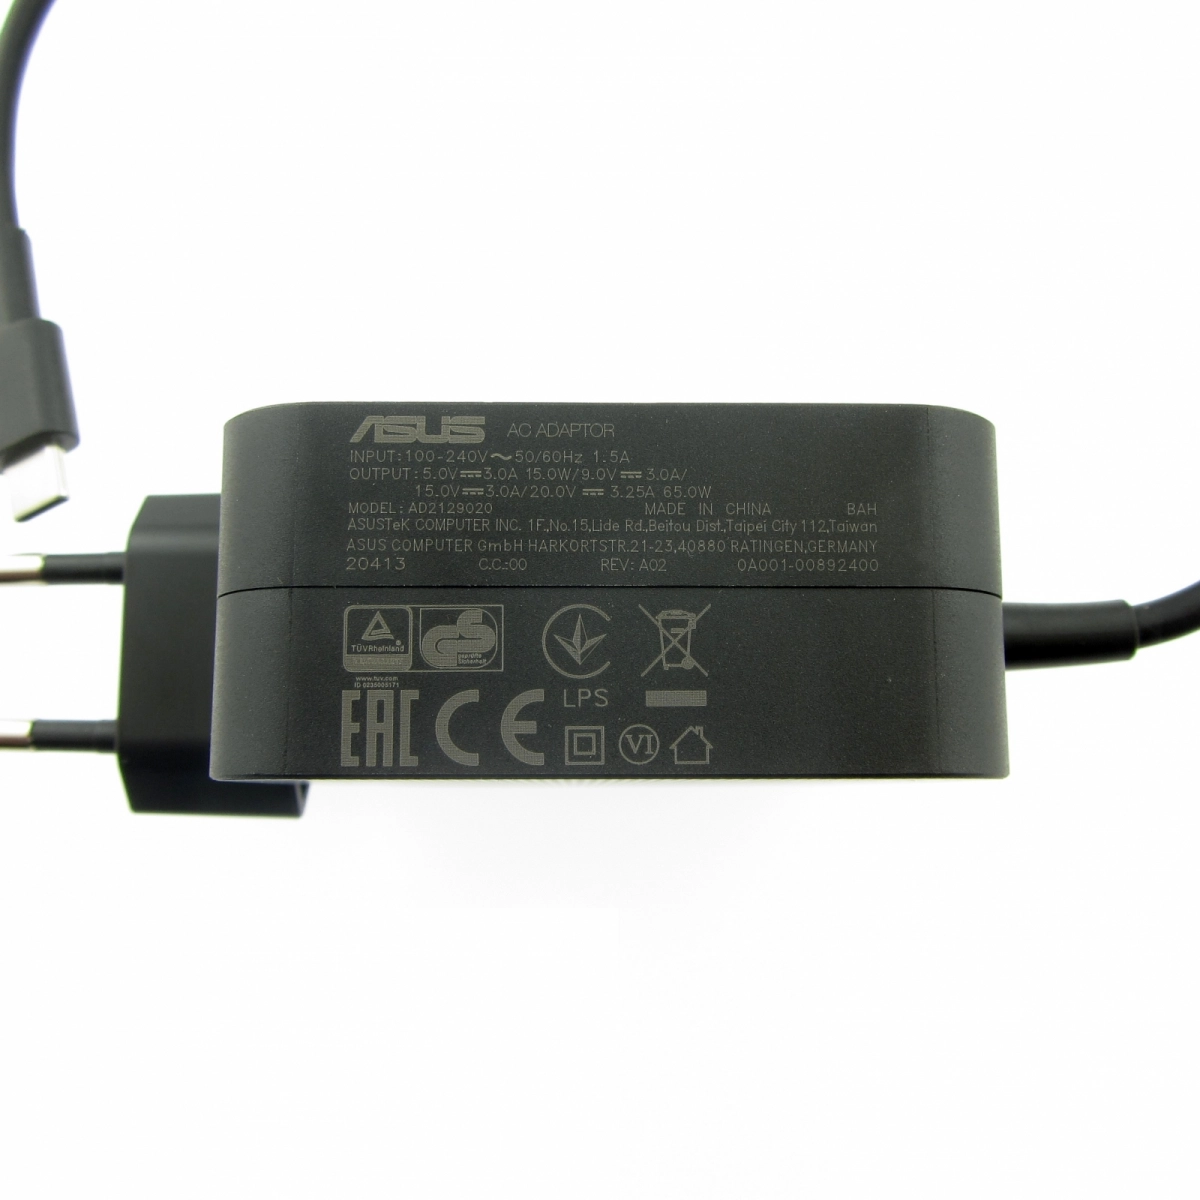 Original Netzteil für ASUS 0A001-00892400, 20V, 3.25A, Stecker USB-C, 65W